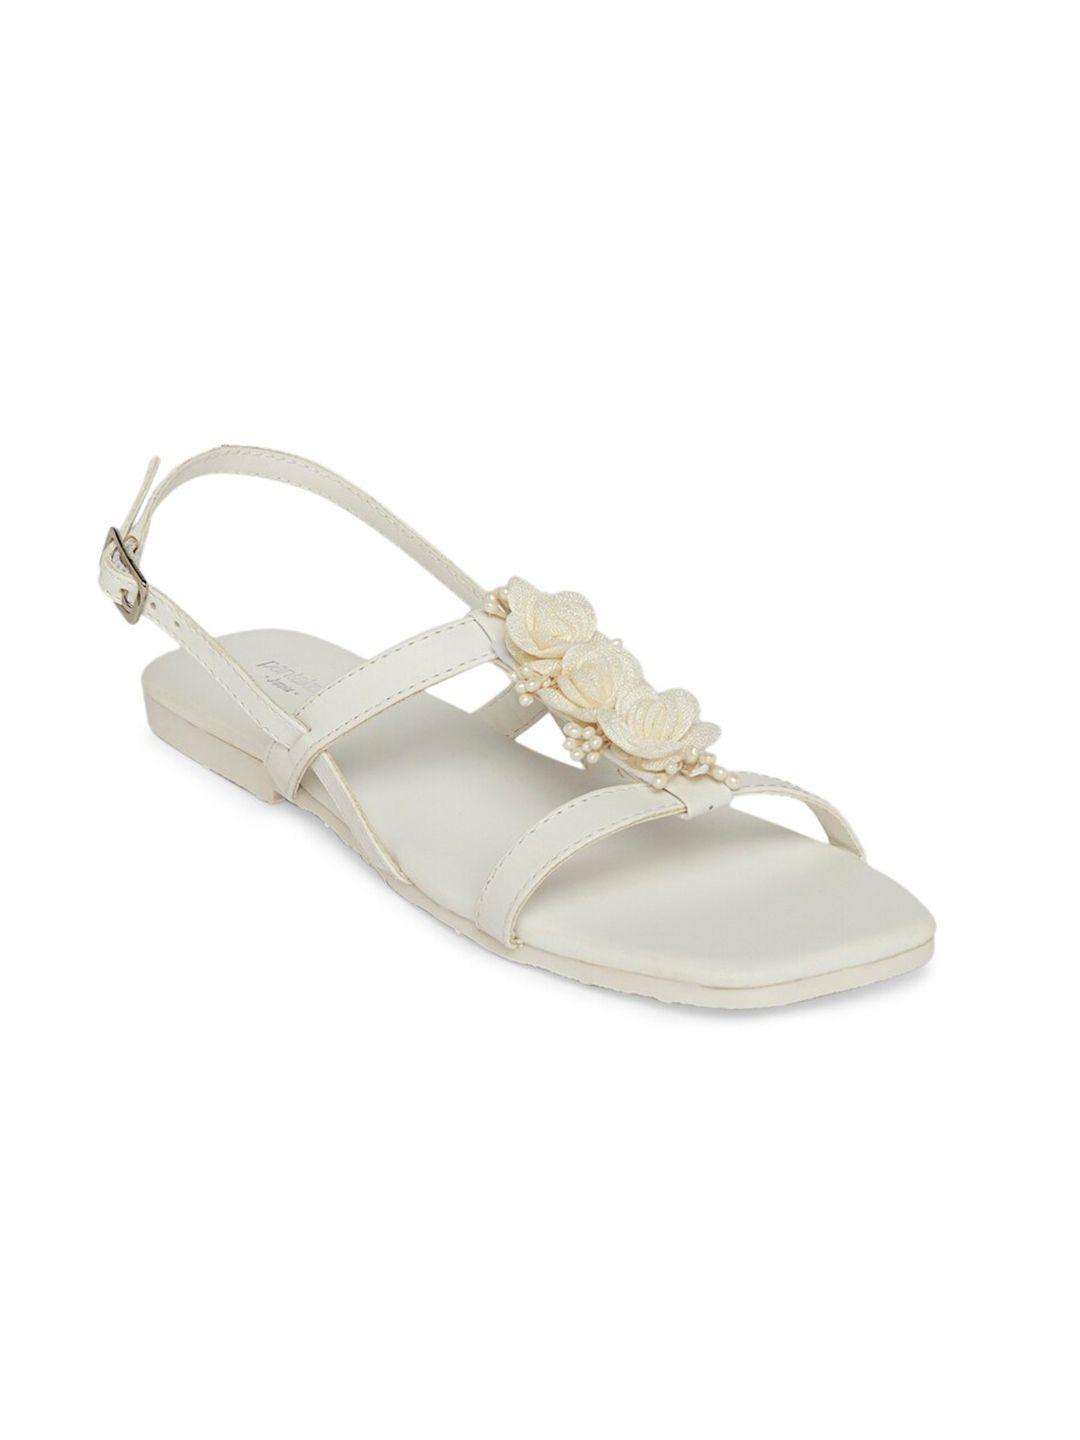 pantaloons junior girls white embellished open toe flats